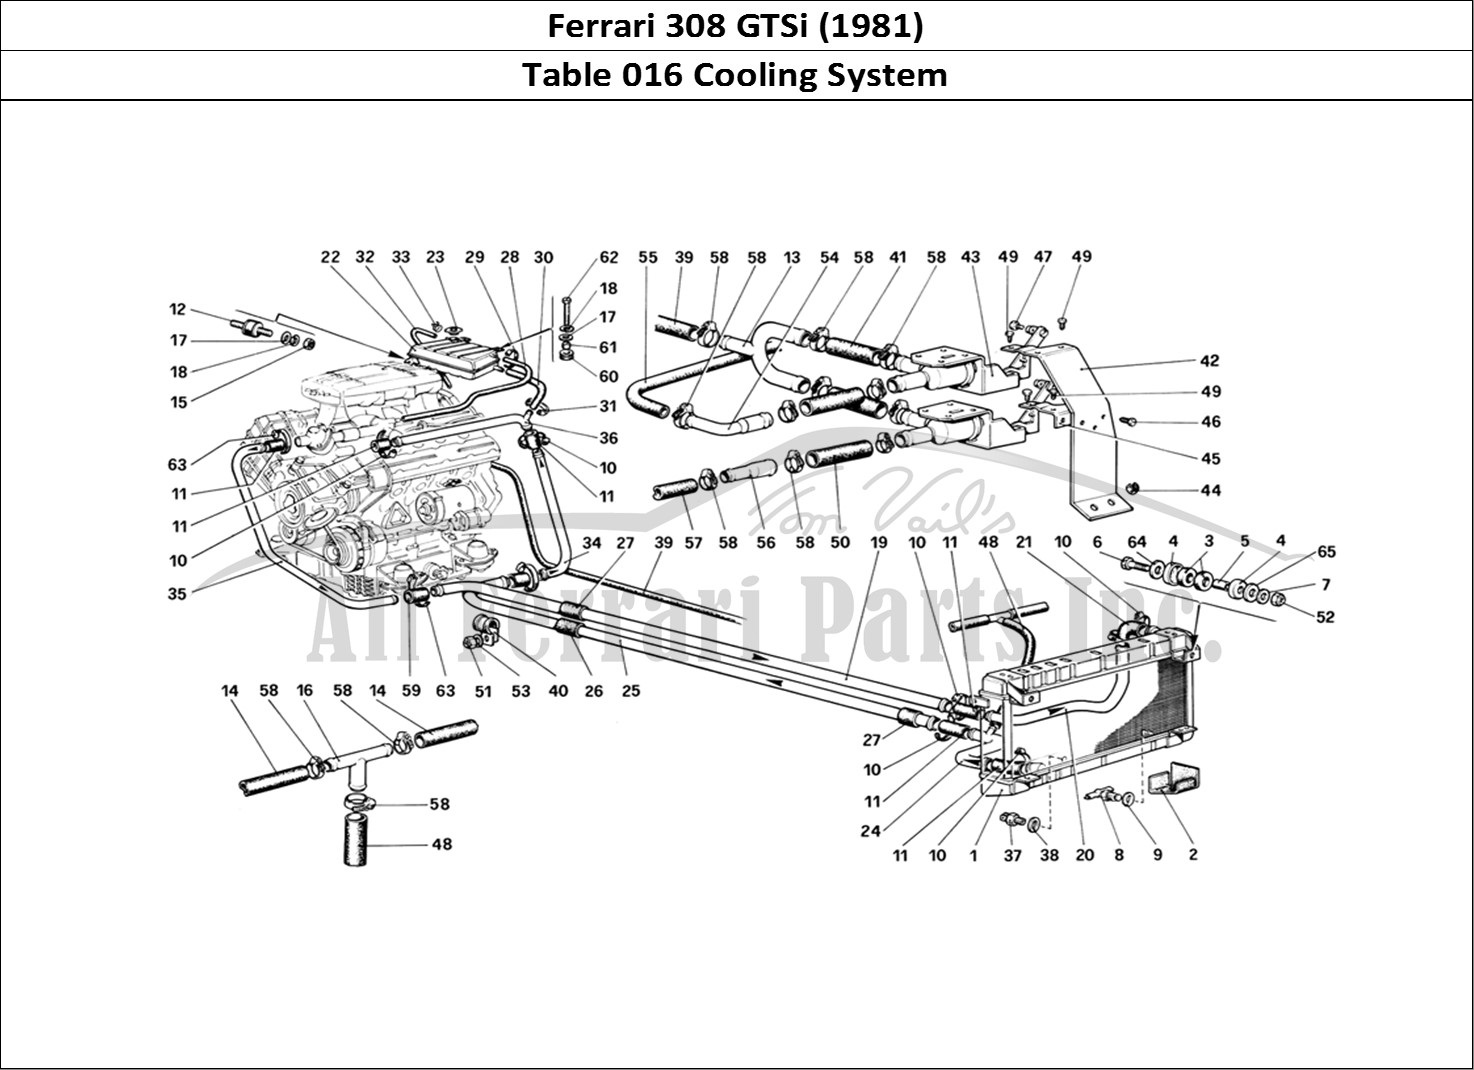 Ferrari Parts Ferrari 308 GTBi (1981) Page 016 Cooling System